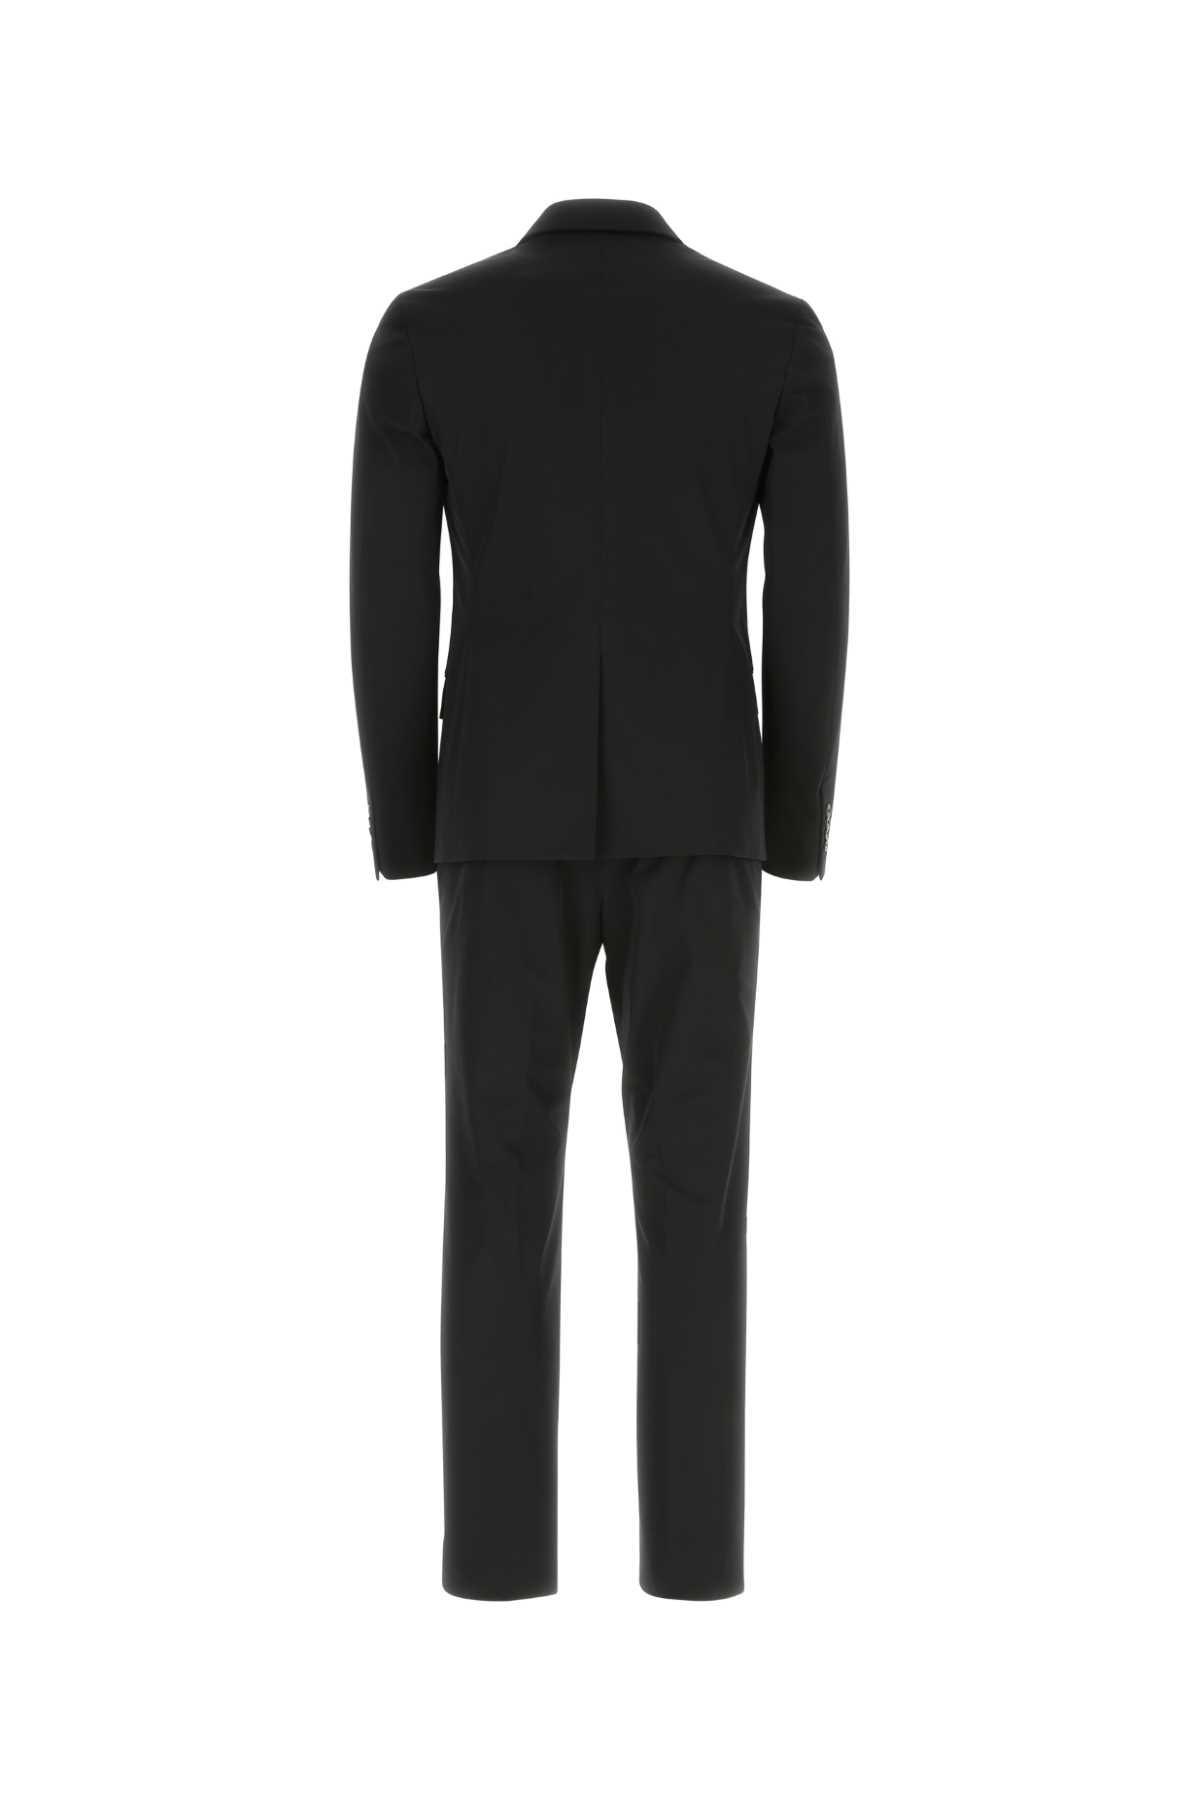 Prada Black Stretch Polyester Suit In F0002